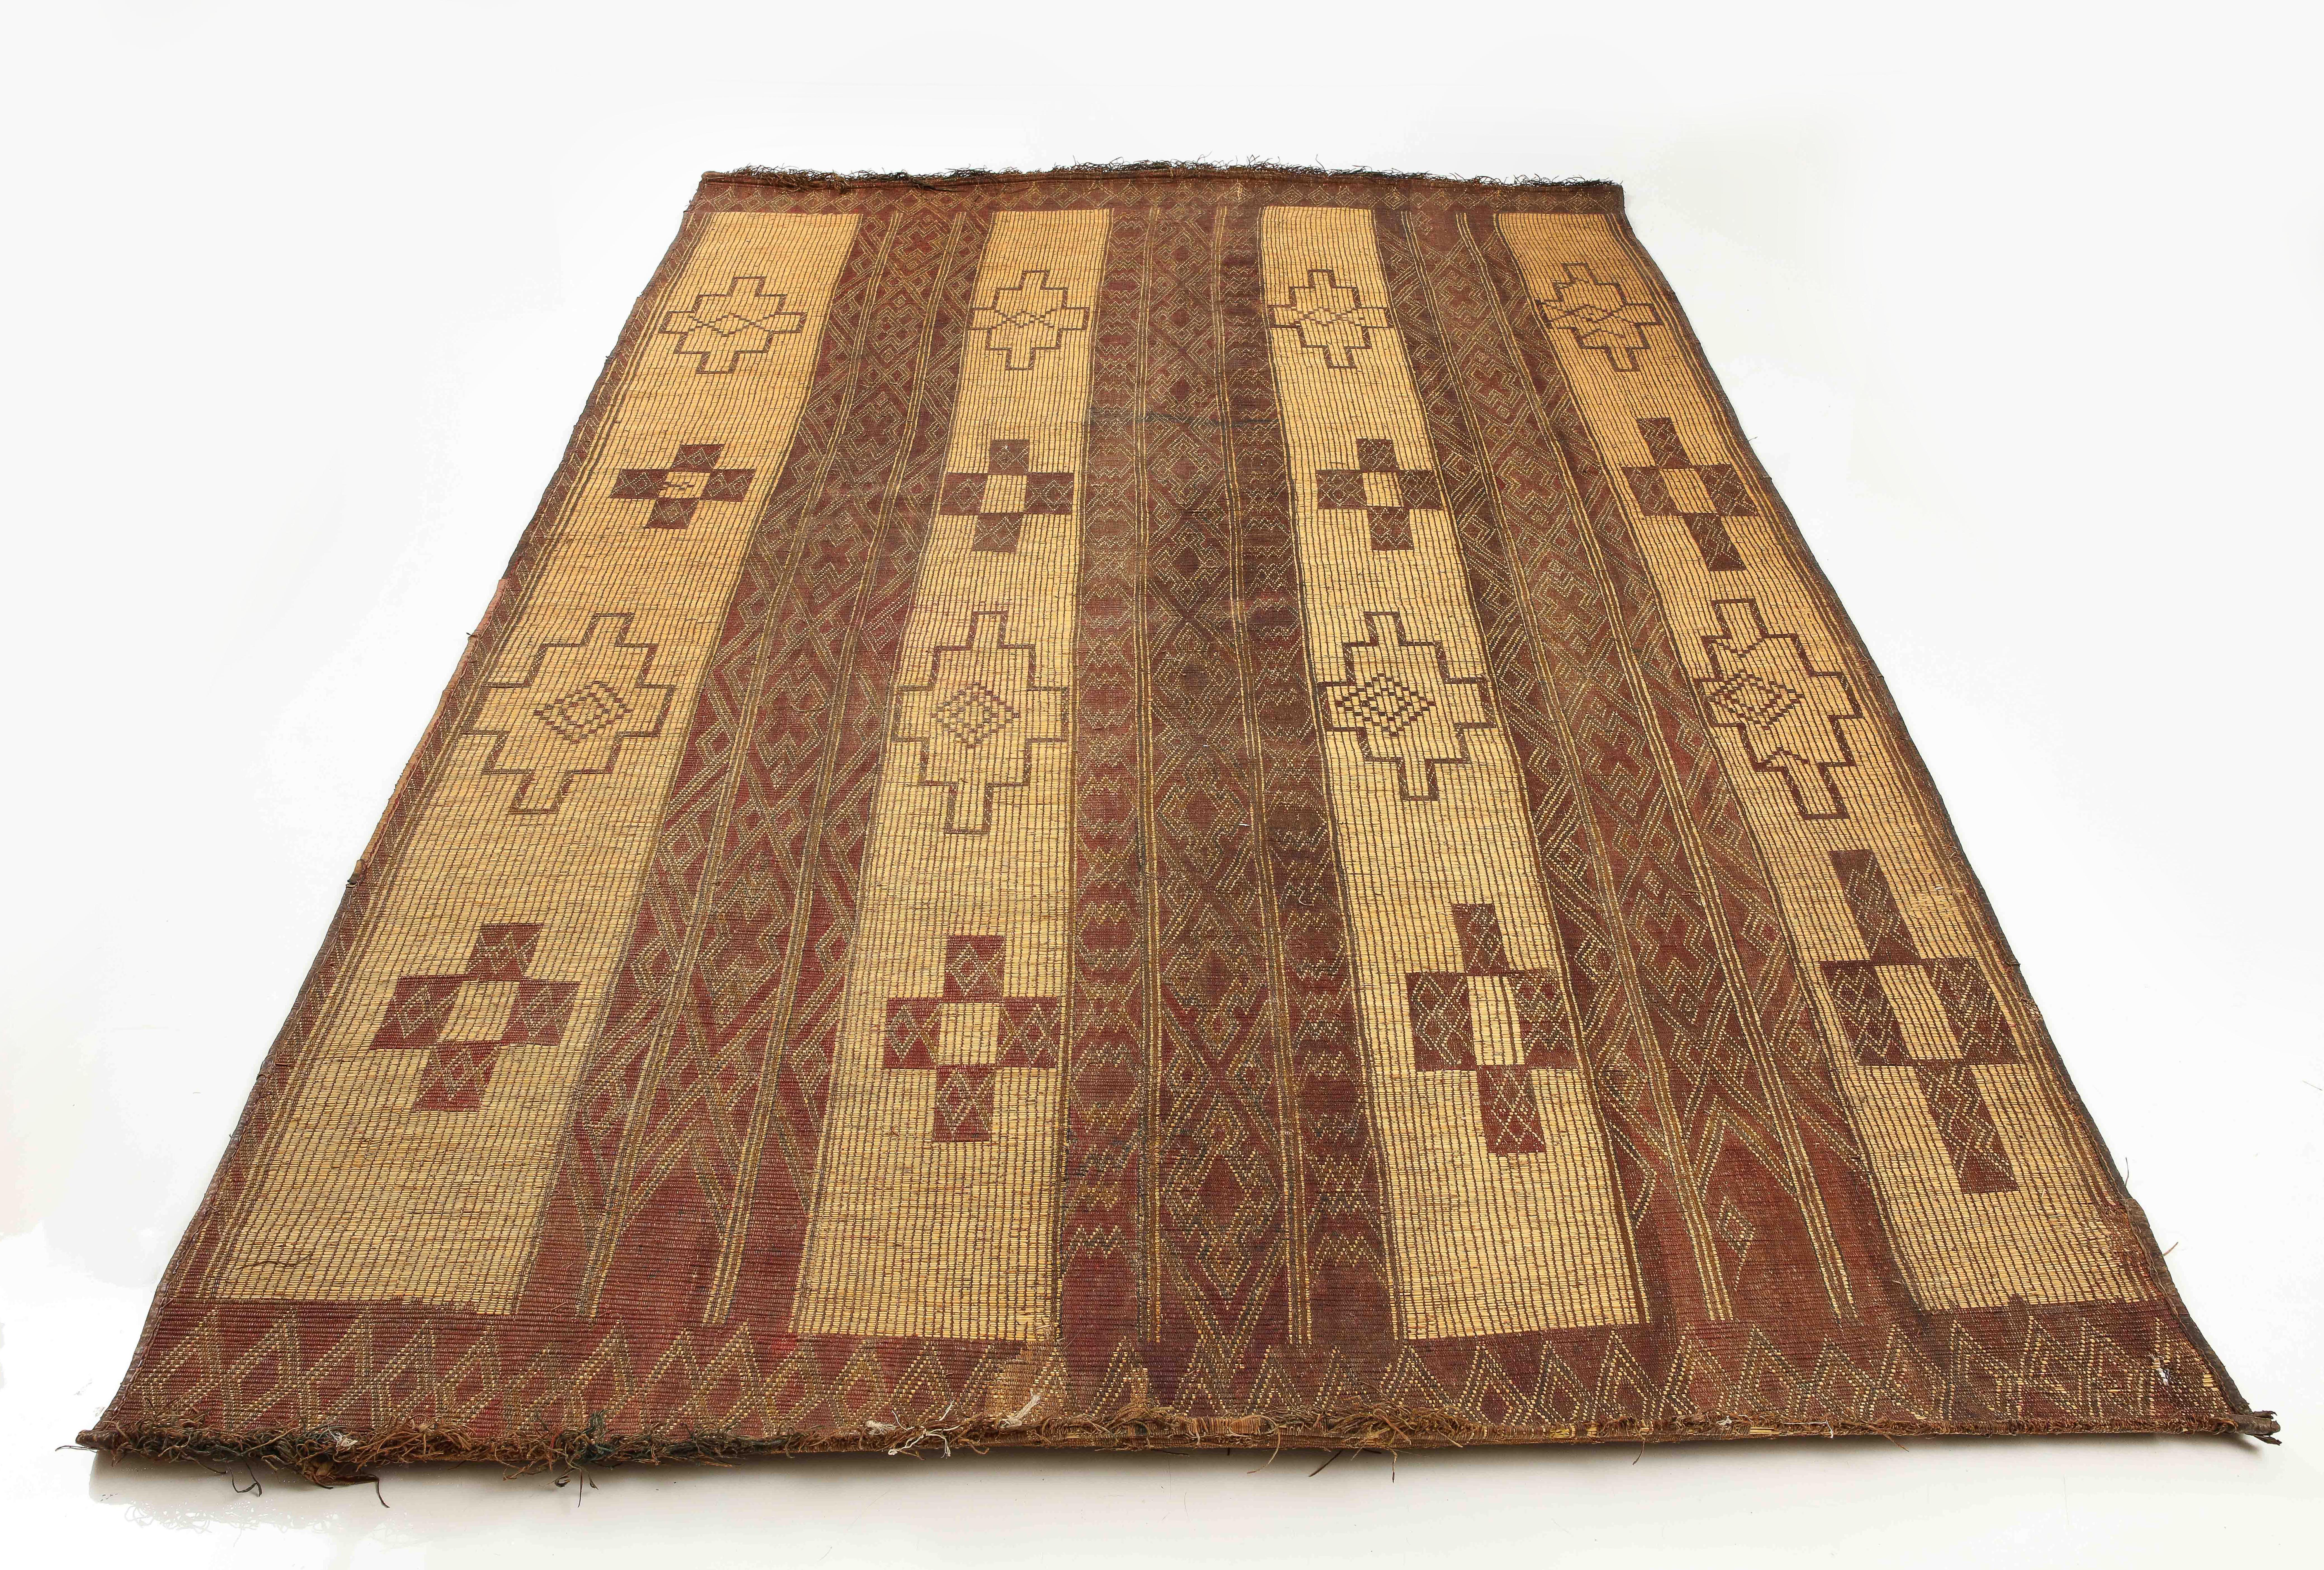 19th C. Tuareg Leather & Reed Hand-Woven Carpet, Sahara Desert

W: 11'5